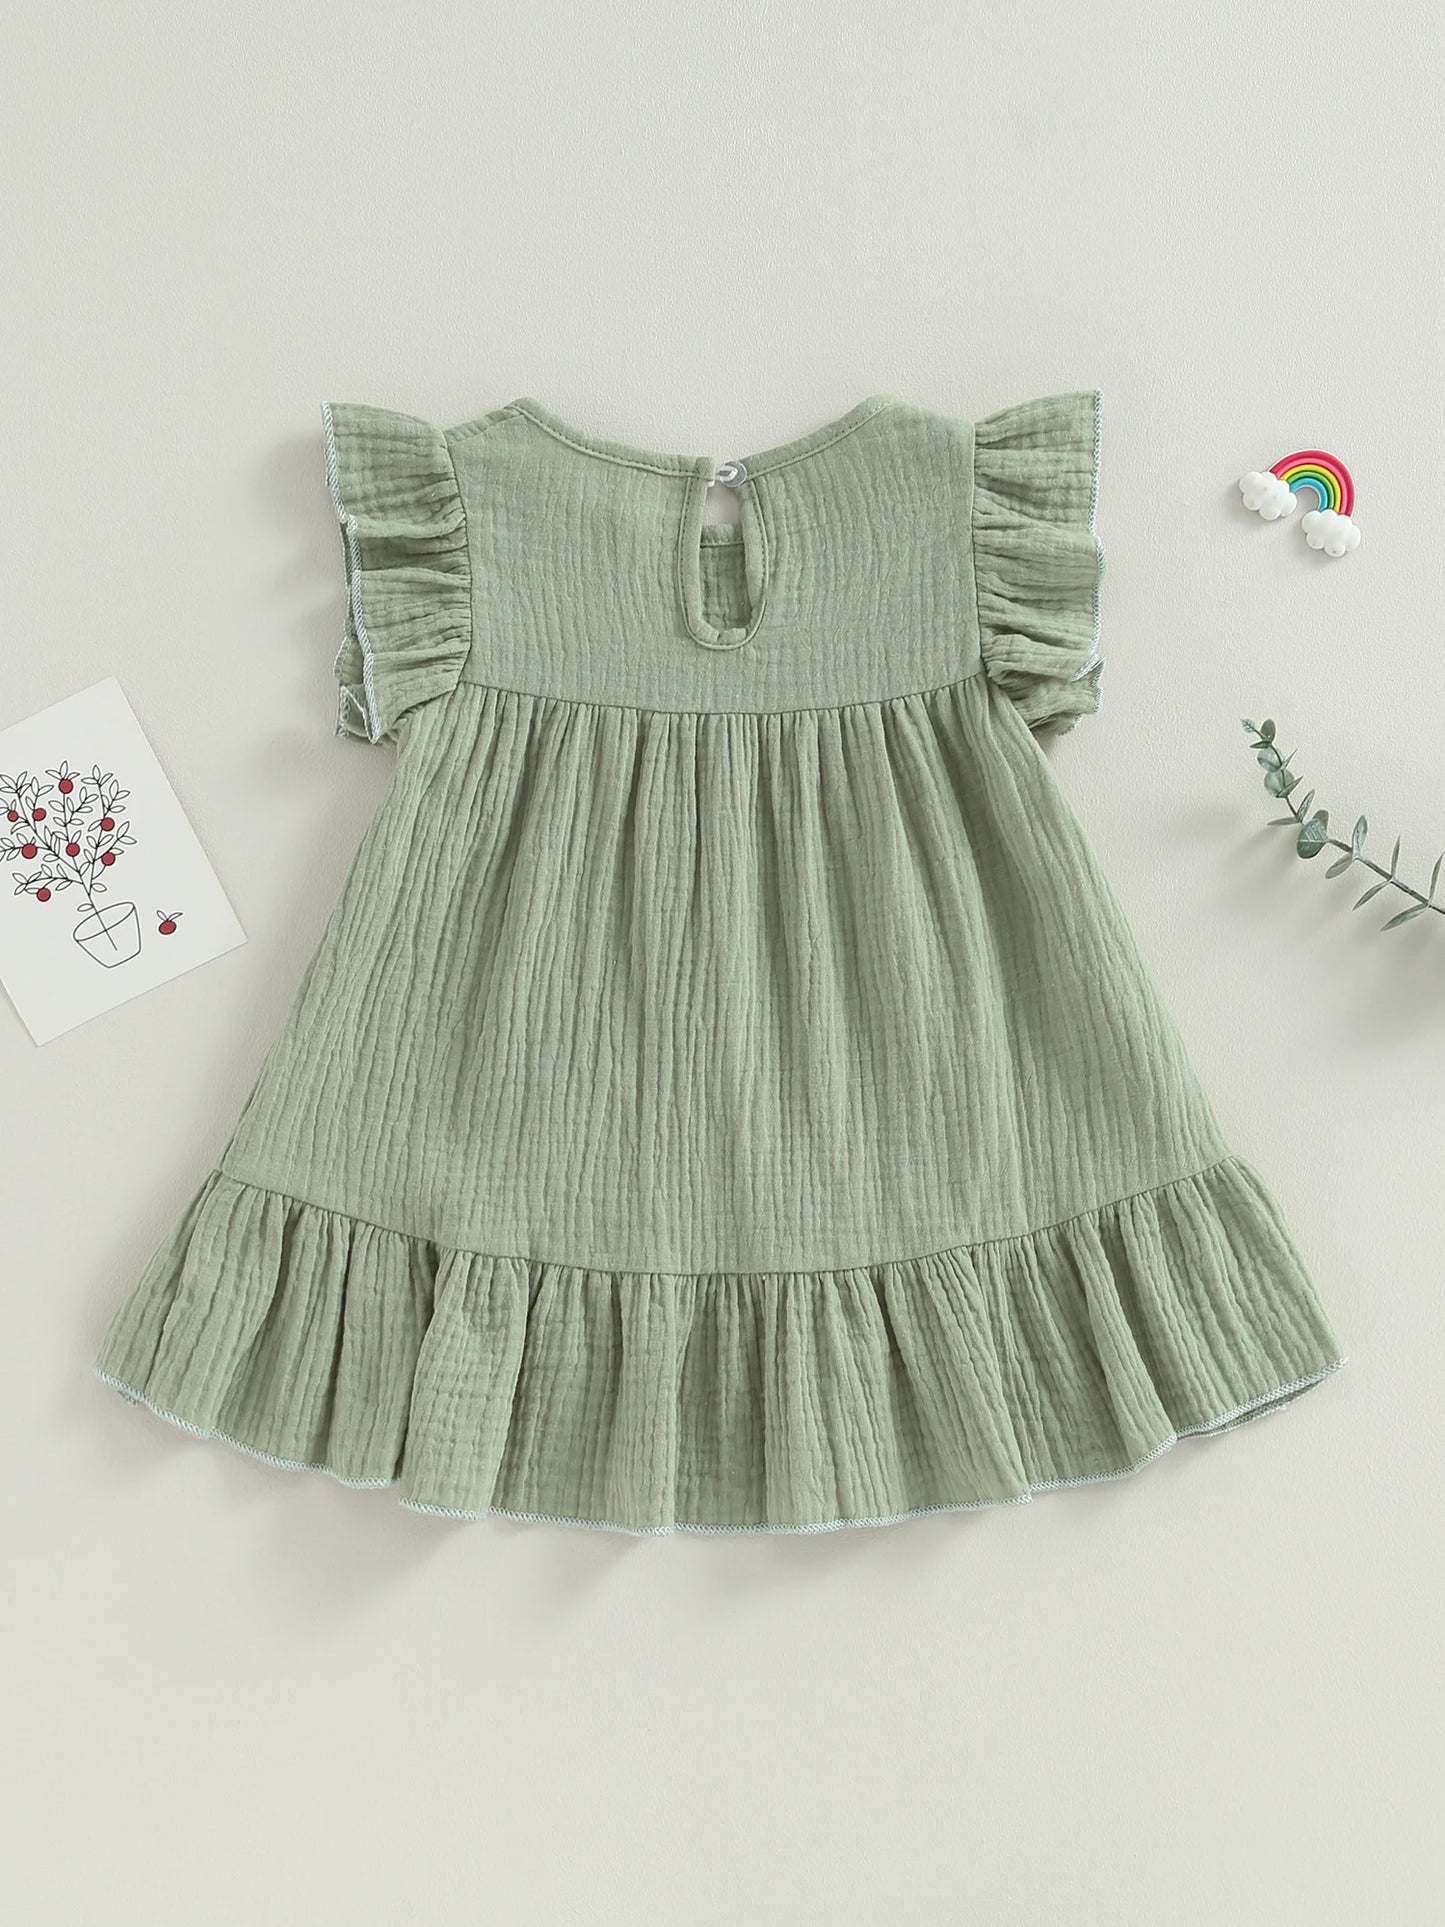 Cotton Linen Dress Toddler Girls Sleeveless Ruffle Sundress Floral Embroidered Flare Dress Baby Kids Summer Clothes (Pink 1-2）